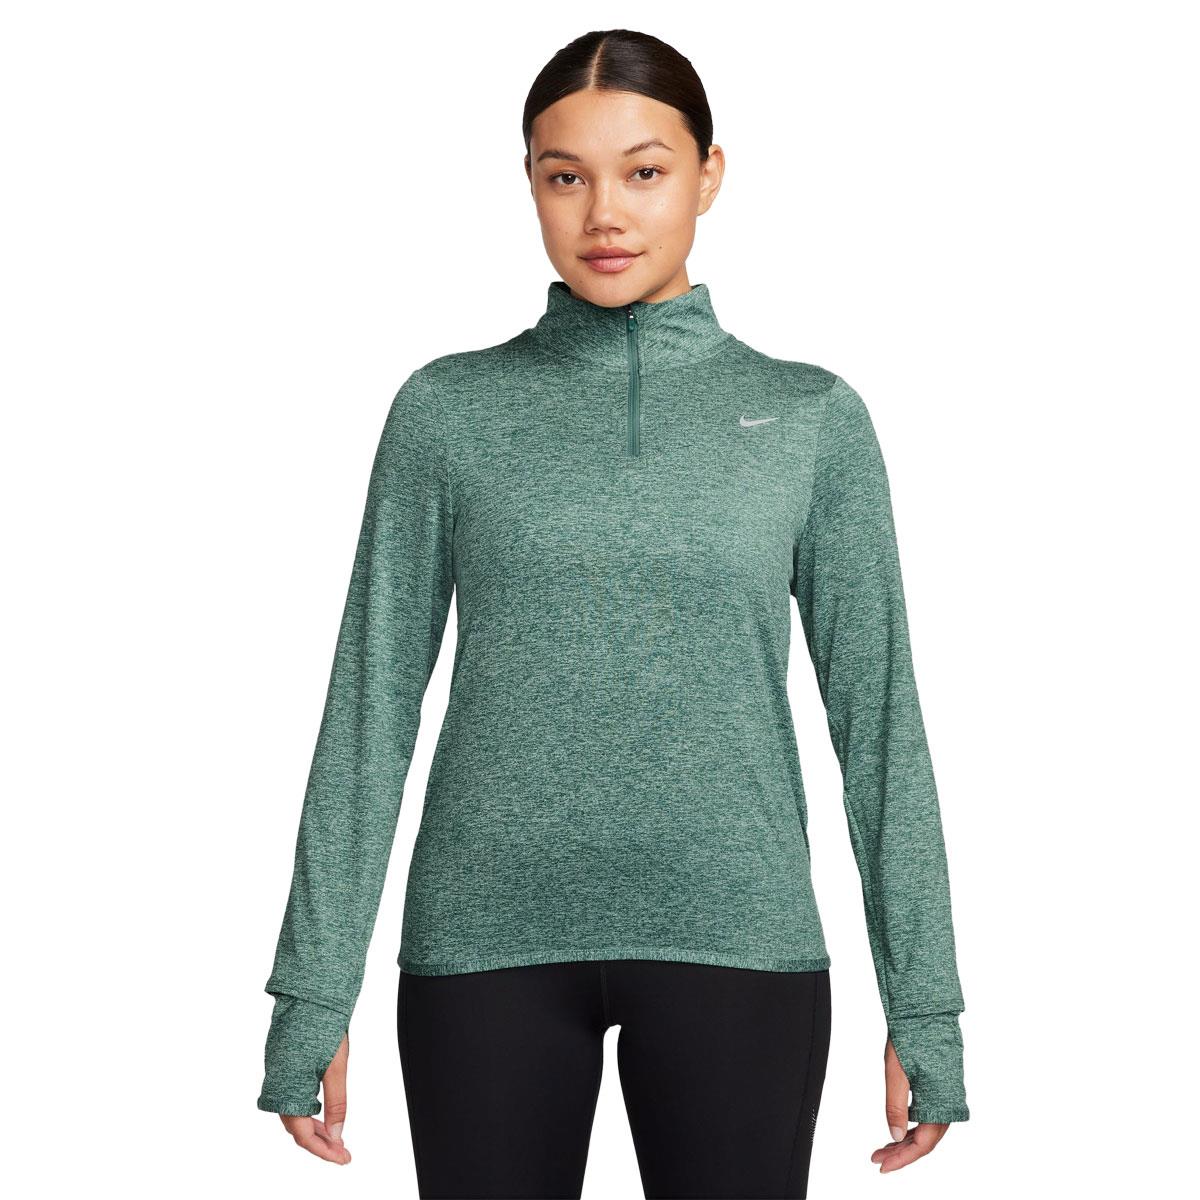 Nike Womens Dri-FIT Swift Element UV 1/2 Zip Running Top Green S